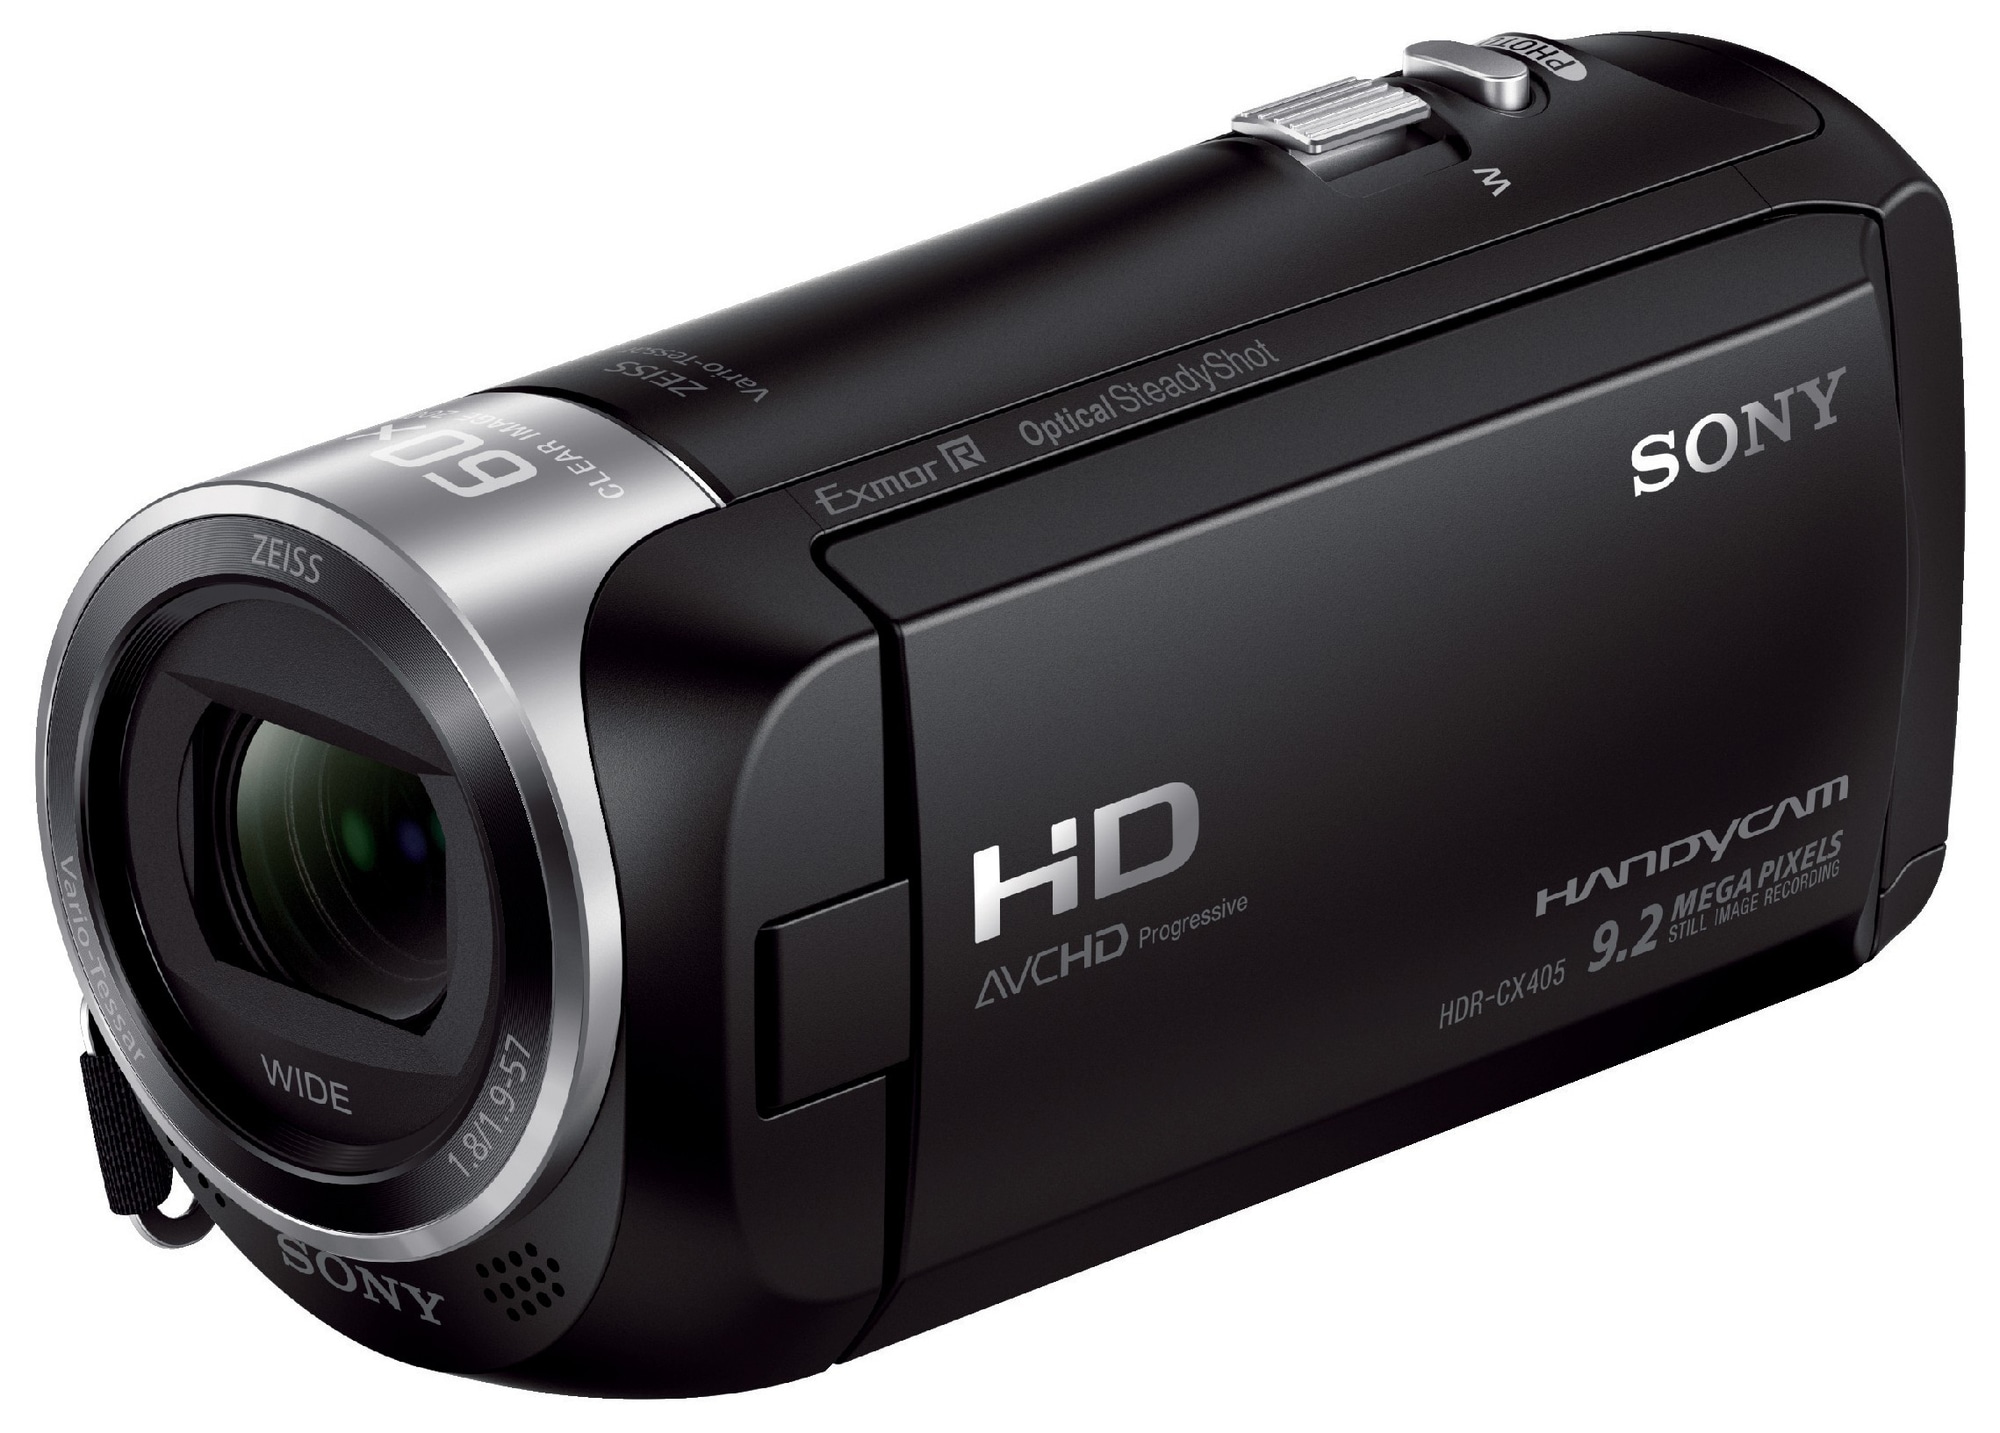 Sony Handycam HDR-CX405 videokamera (sort) - Elkjøp